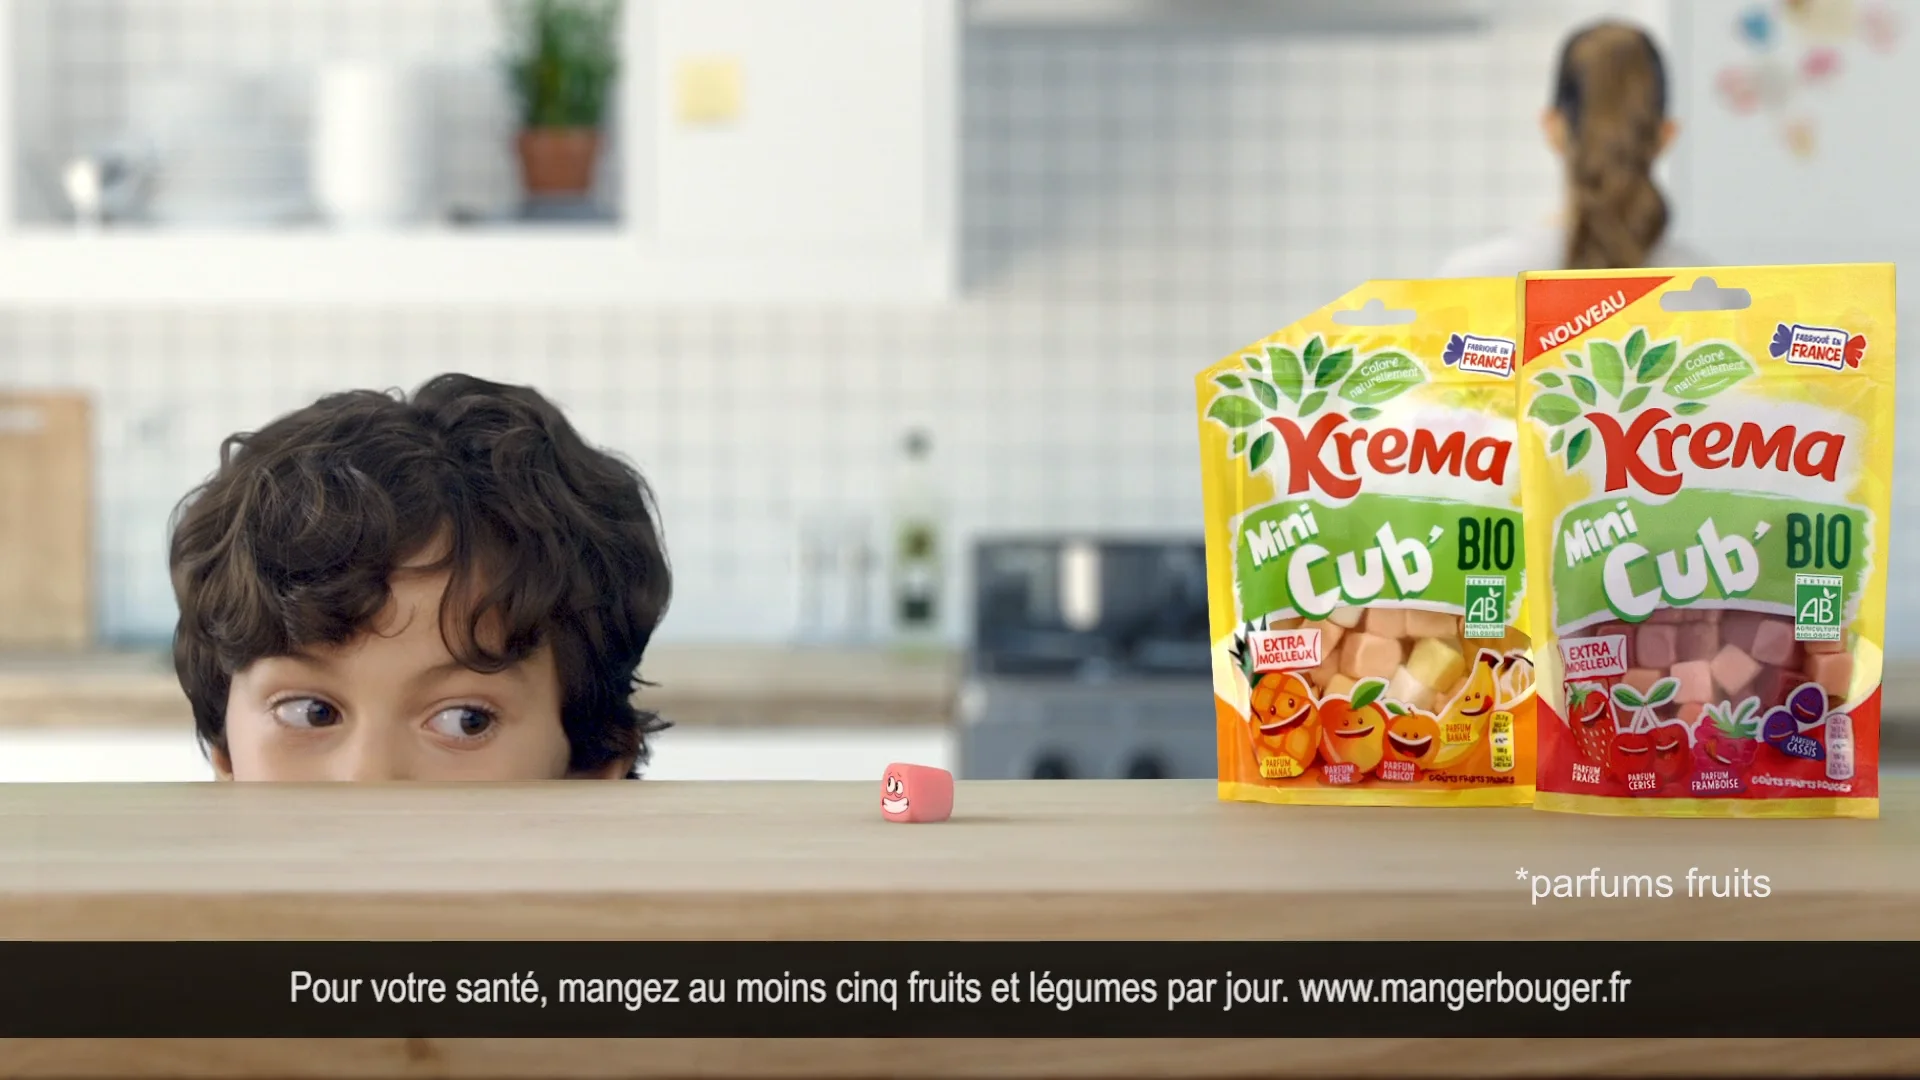 Krema Mini Cub' Bio, Les bonbons bio